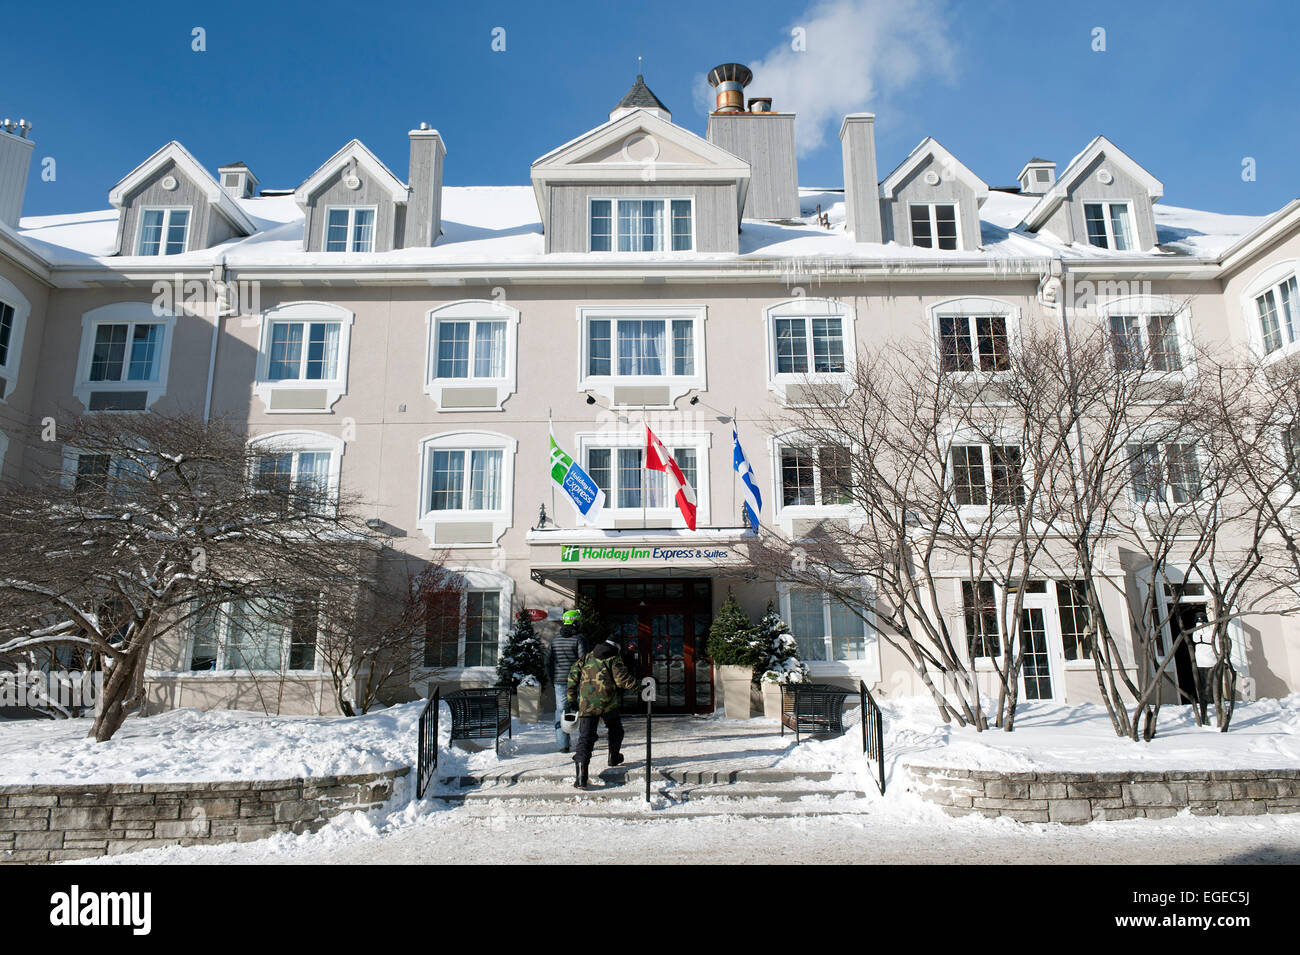 Holiday Inn Hotel At Mont Tremblant Ski Resort Province Of Quebec